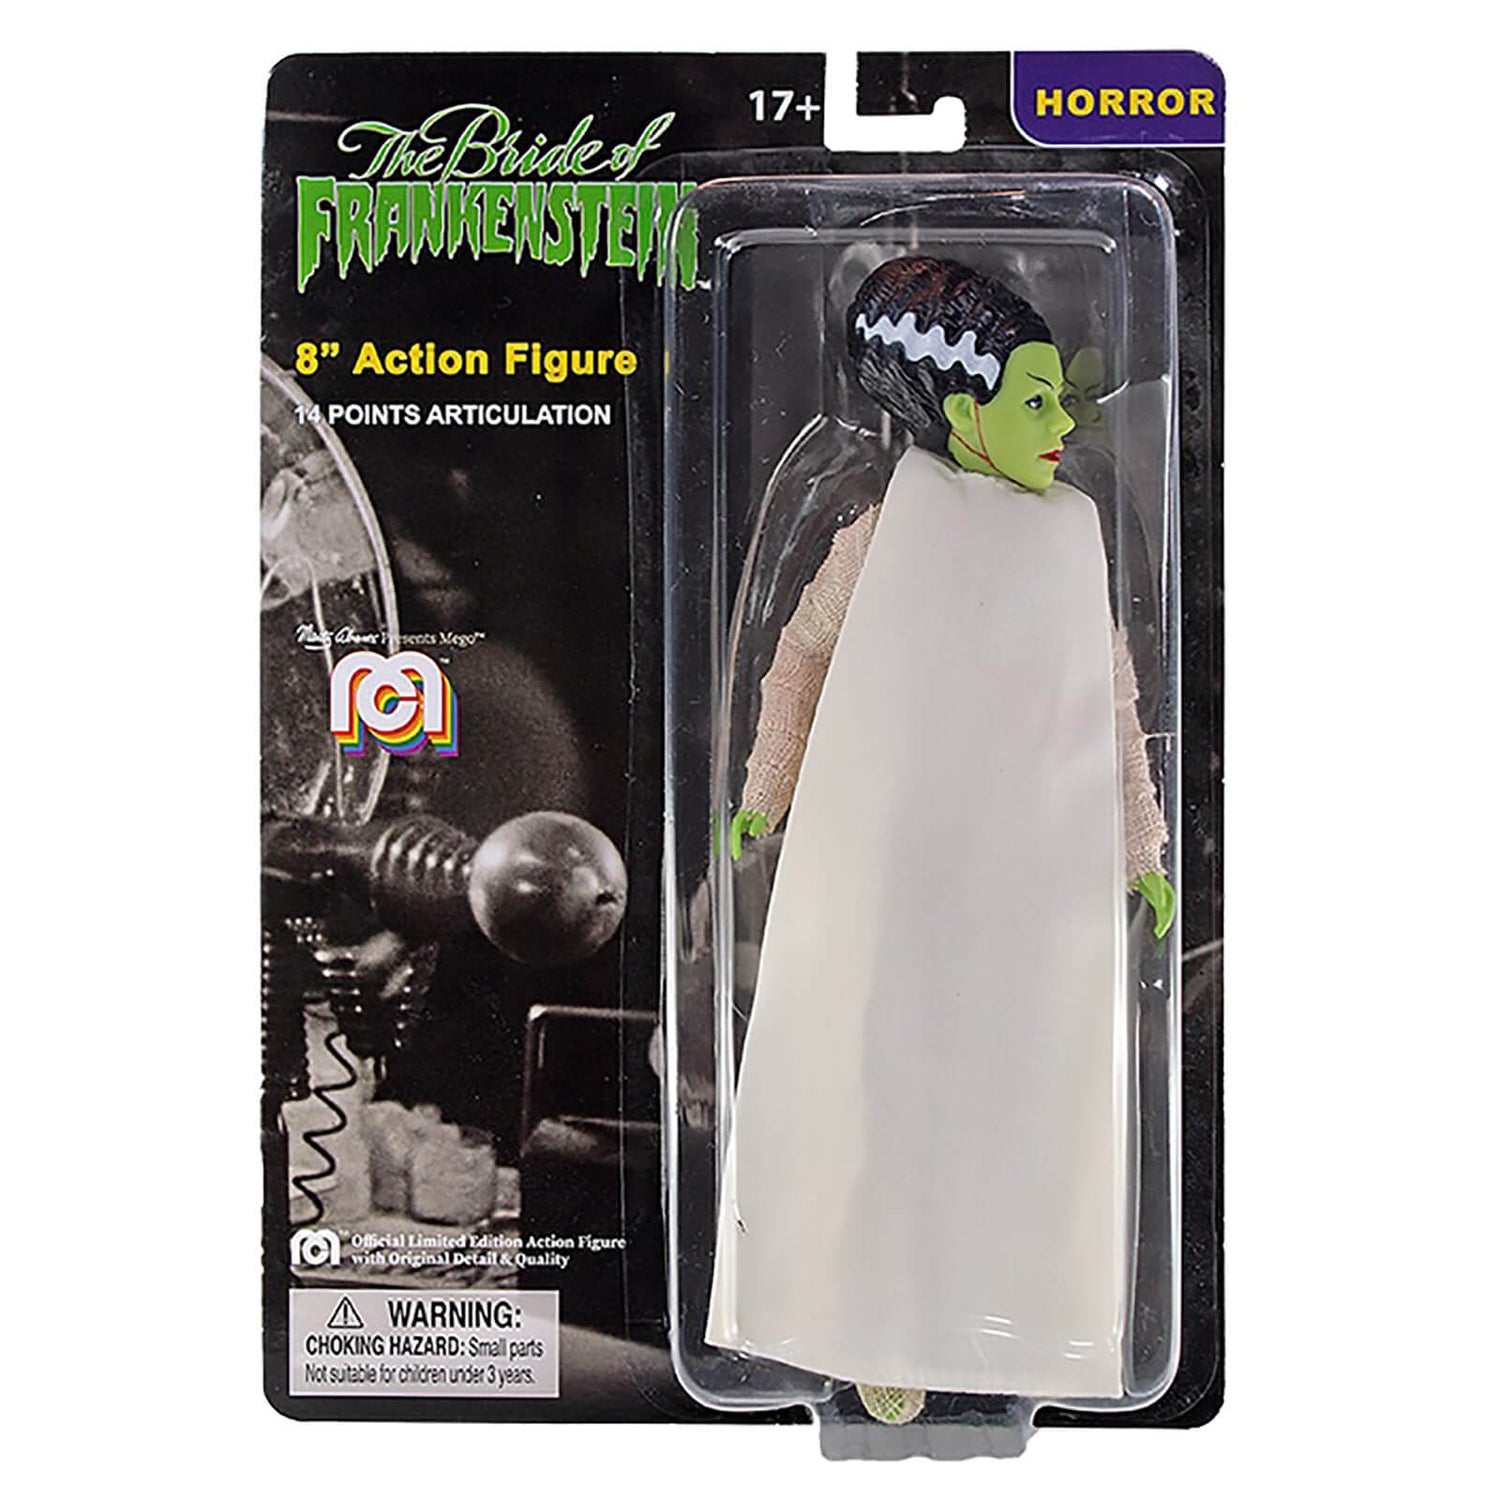 Mego 8" Figure - Universal Monsters Bride of Frankenstein